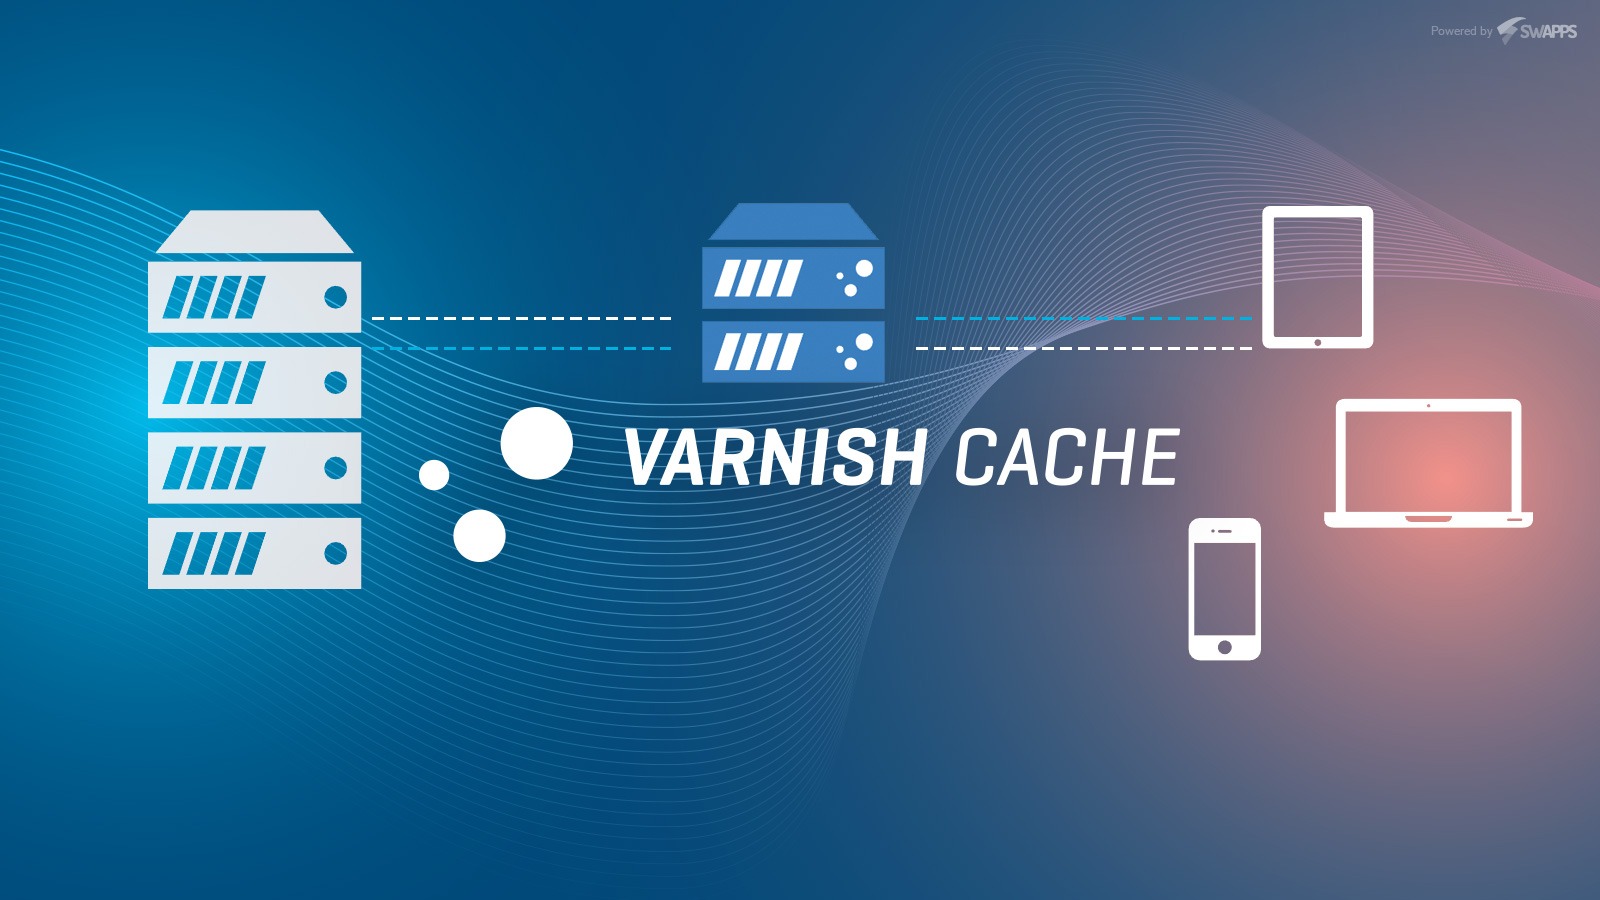 Varnish cache server